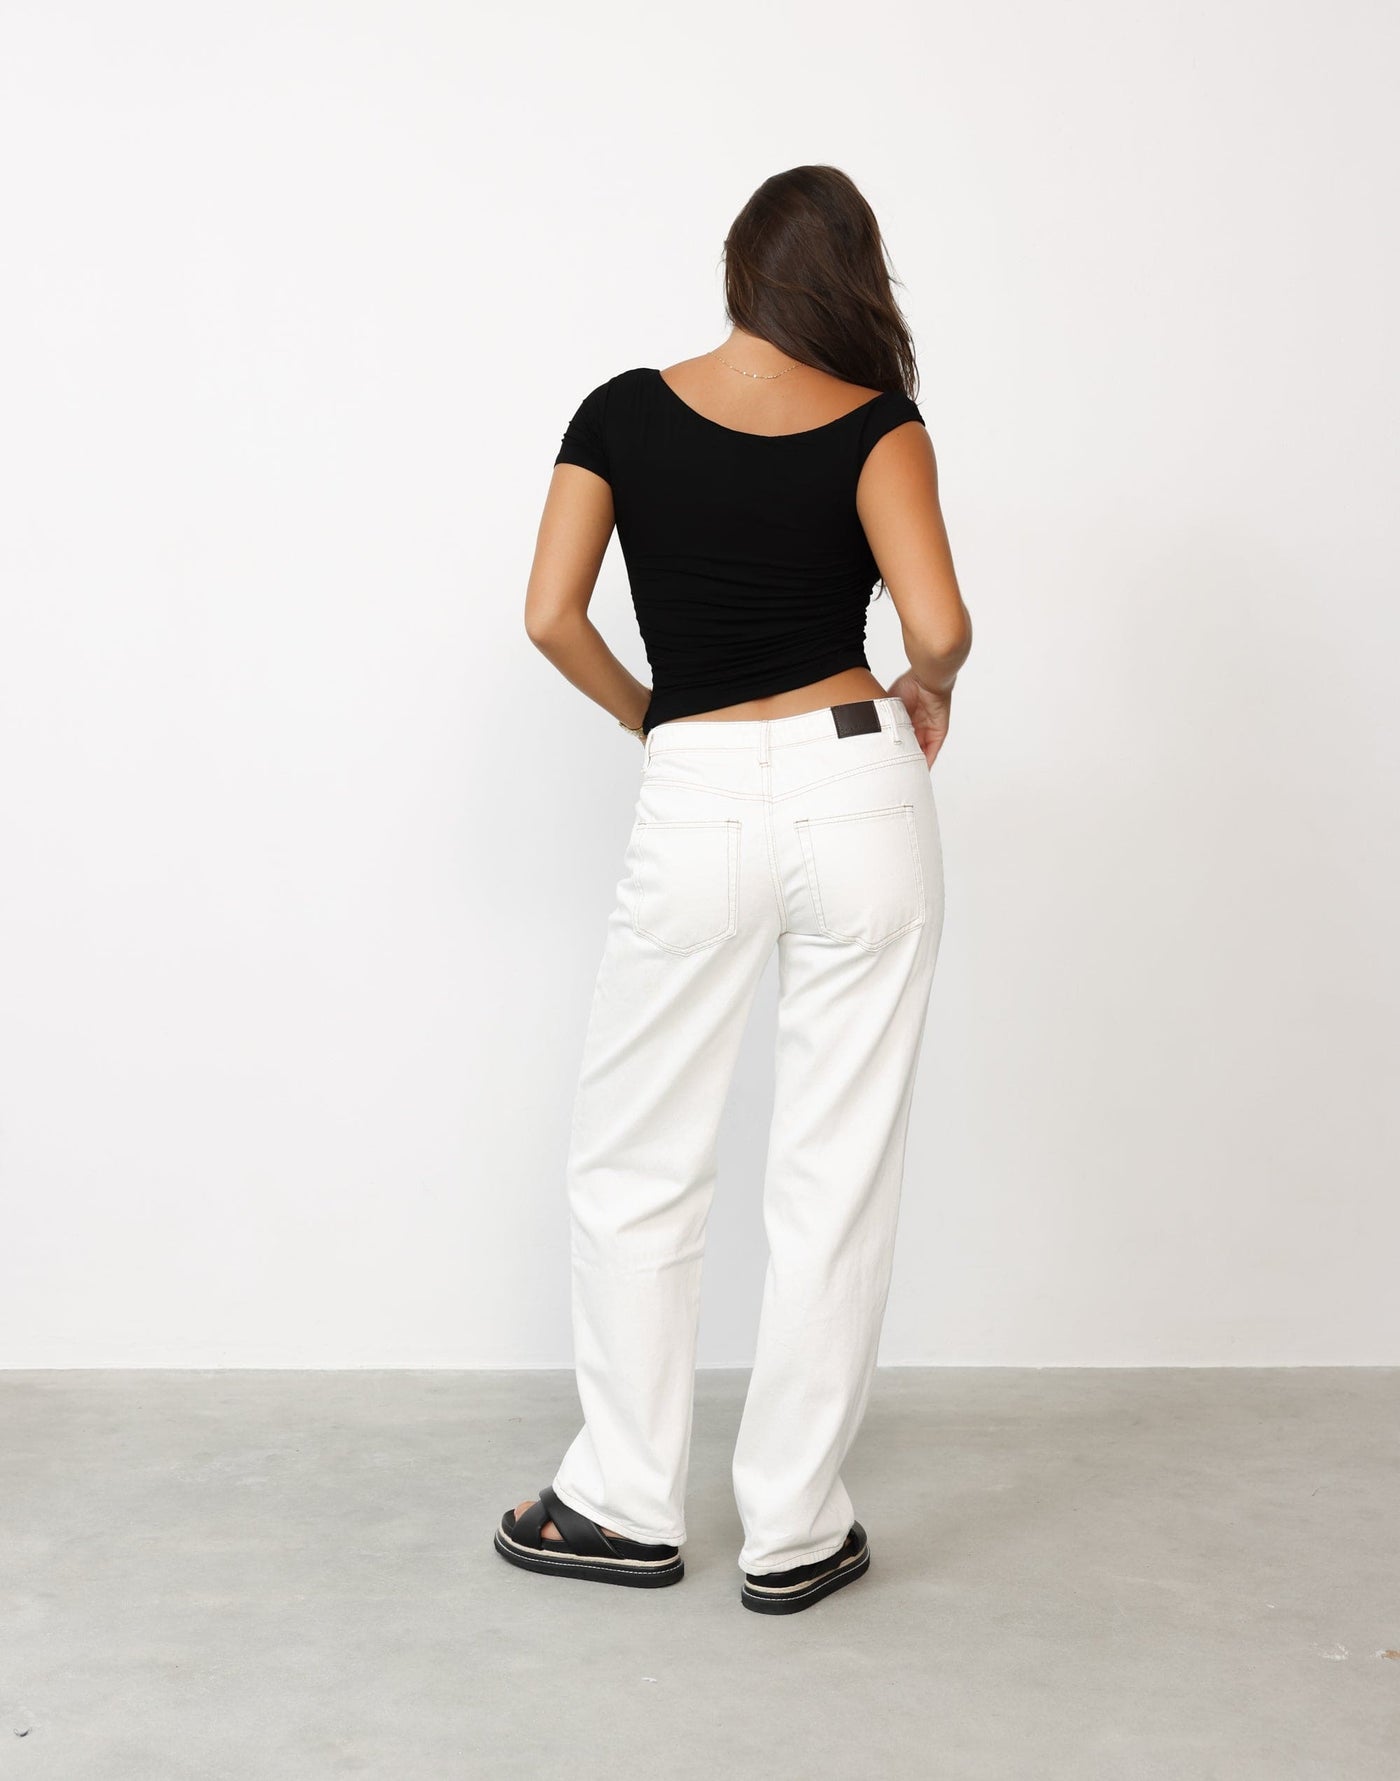 Leona Top (Black) - One Shoulder Neckline Bodycon Top - Women's Top - Charcoal Clothing